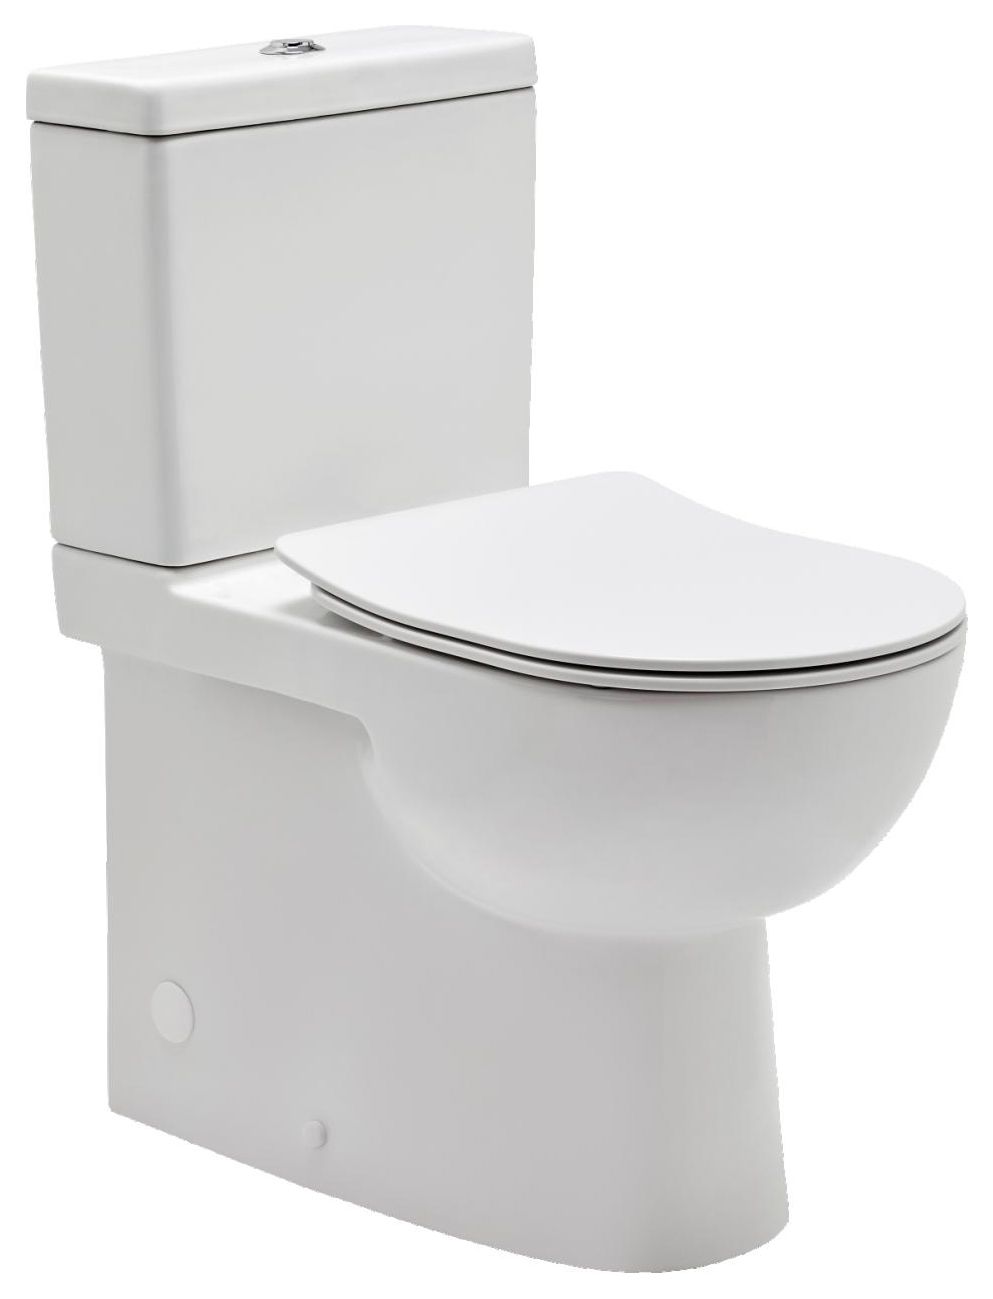 Wickes Phoenix Comfort Height Close Coupled Toilet Pan,